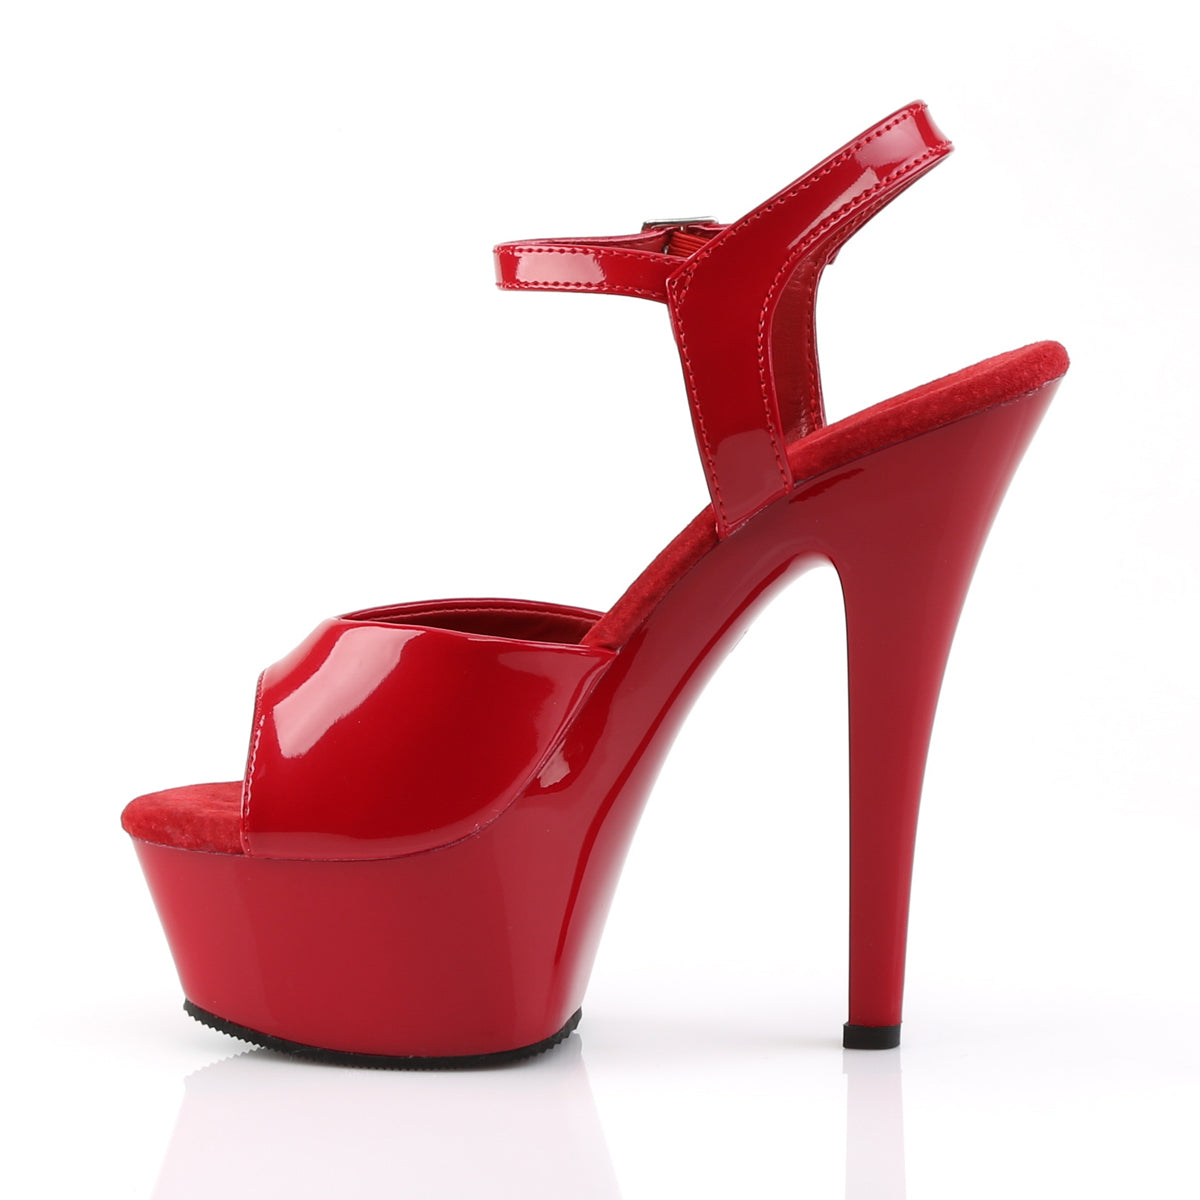 KISS-209 Pleaser 6 Inch Heel Red Pole Dancing Platforms-Pleaser- Sexy Shoes Pole Dance Heels